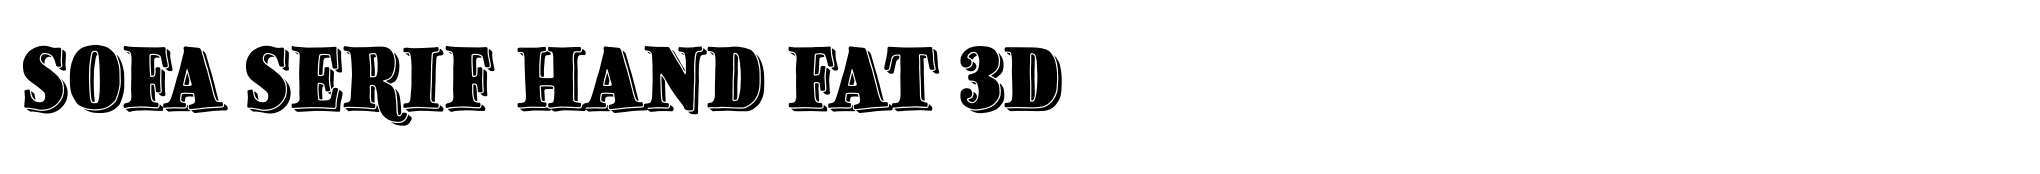 Sofa Serif Hand Fat 3D image